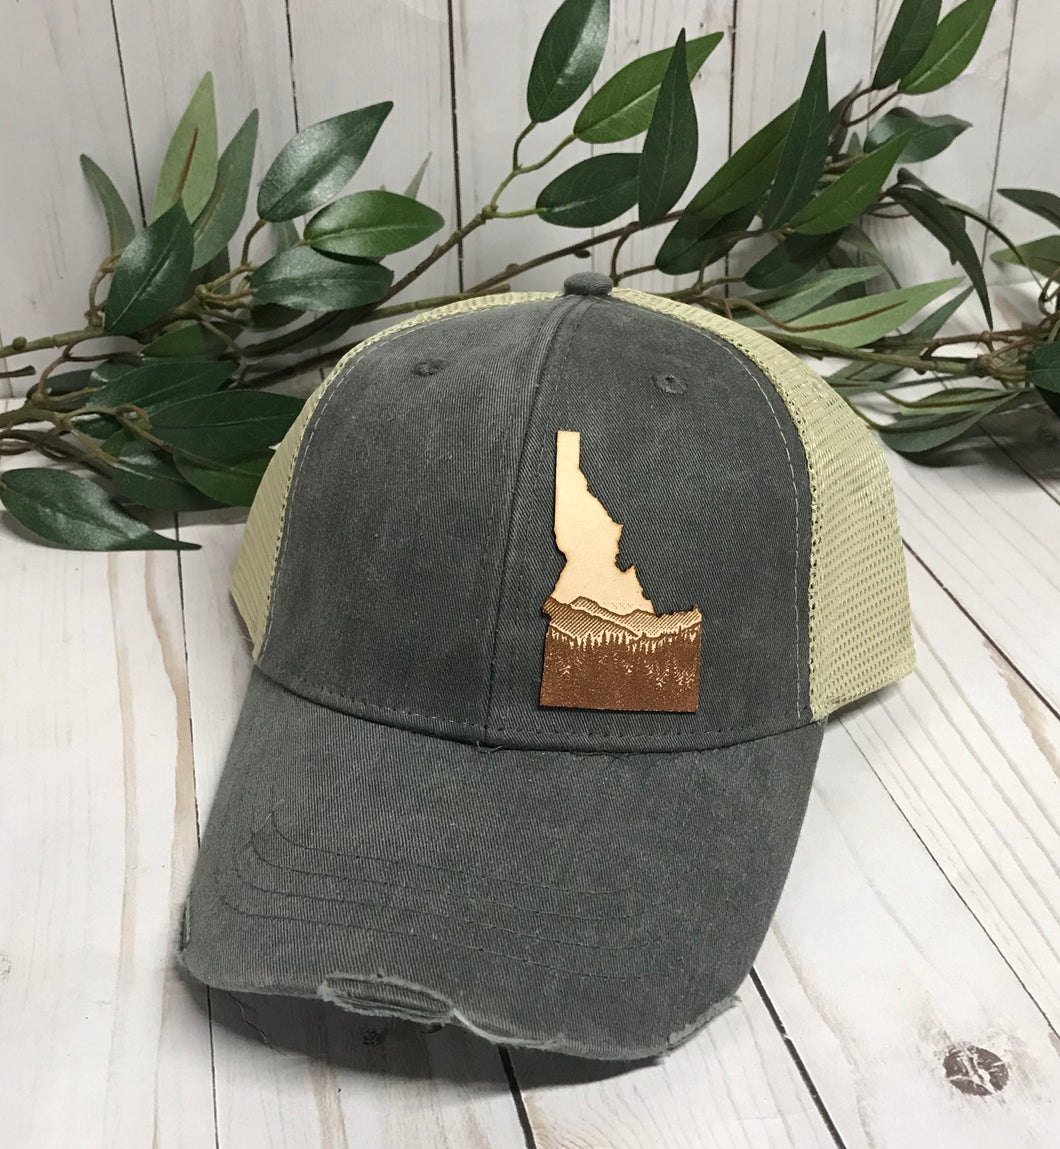 Idaho patch hat